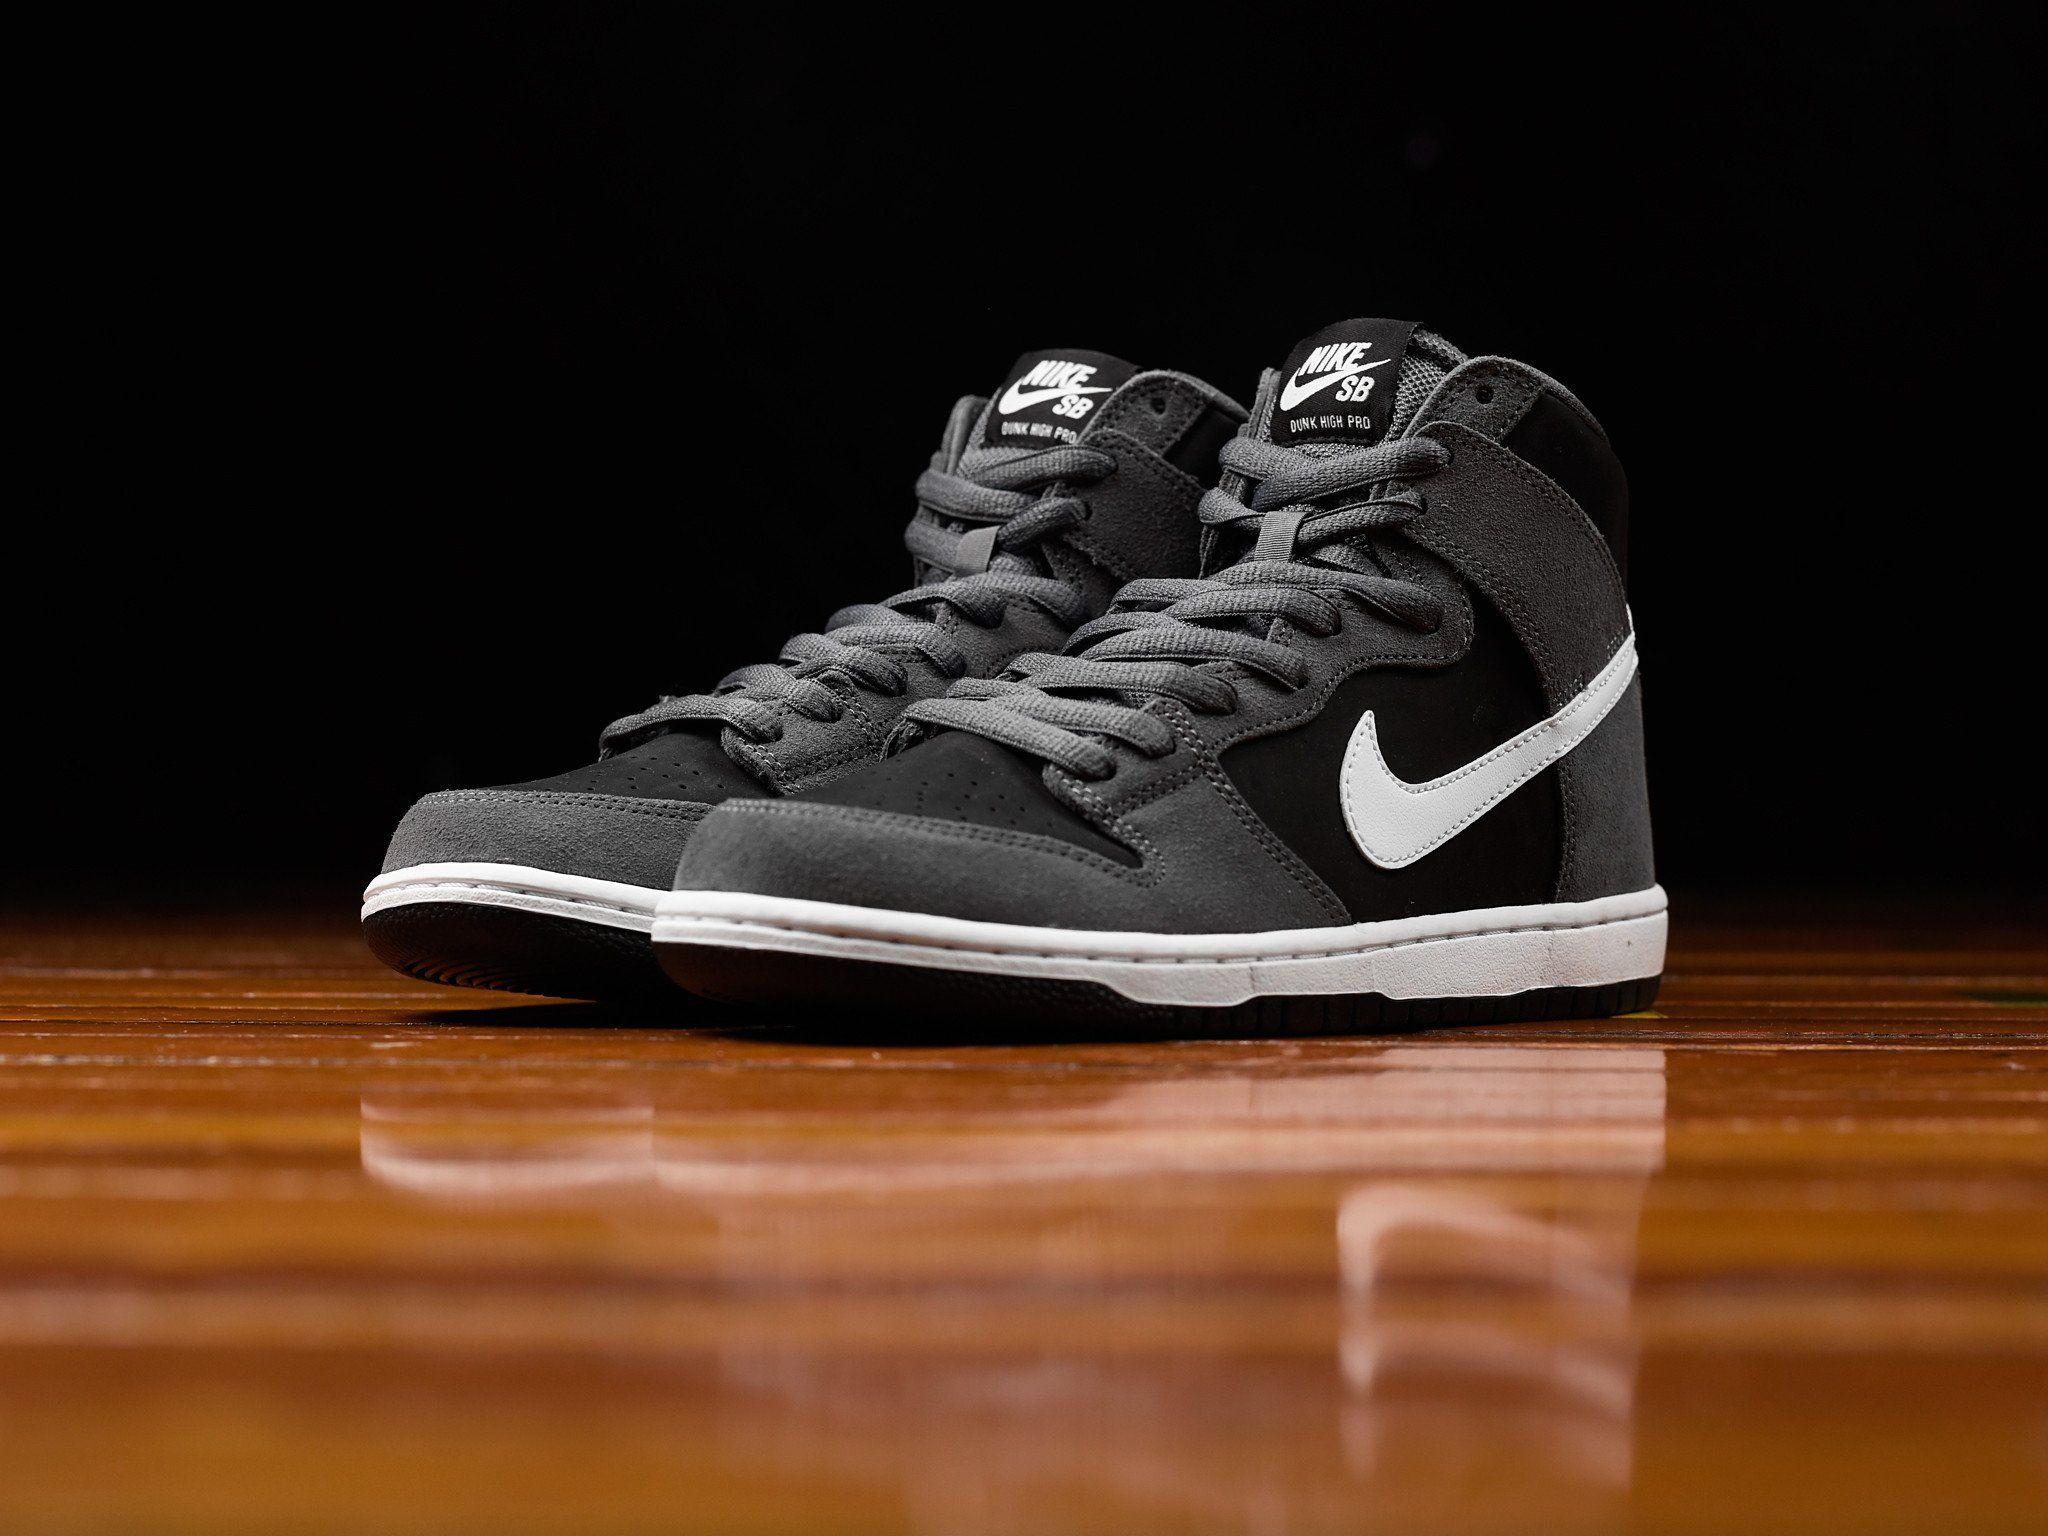 More Image Of The Nike SB Dunk High Pro Shadow • KicksOnFire.com